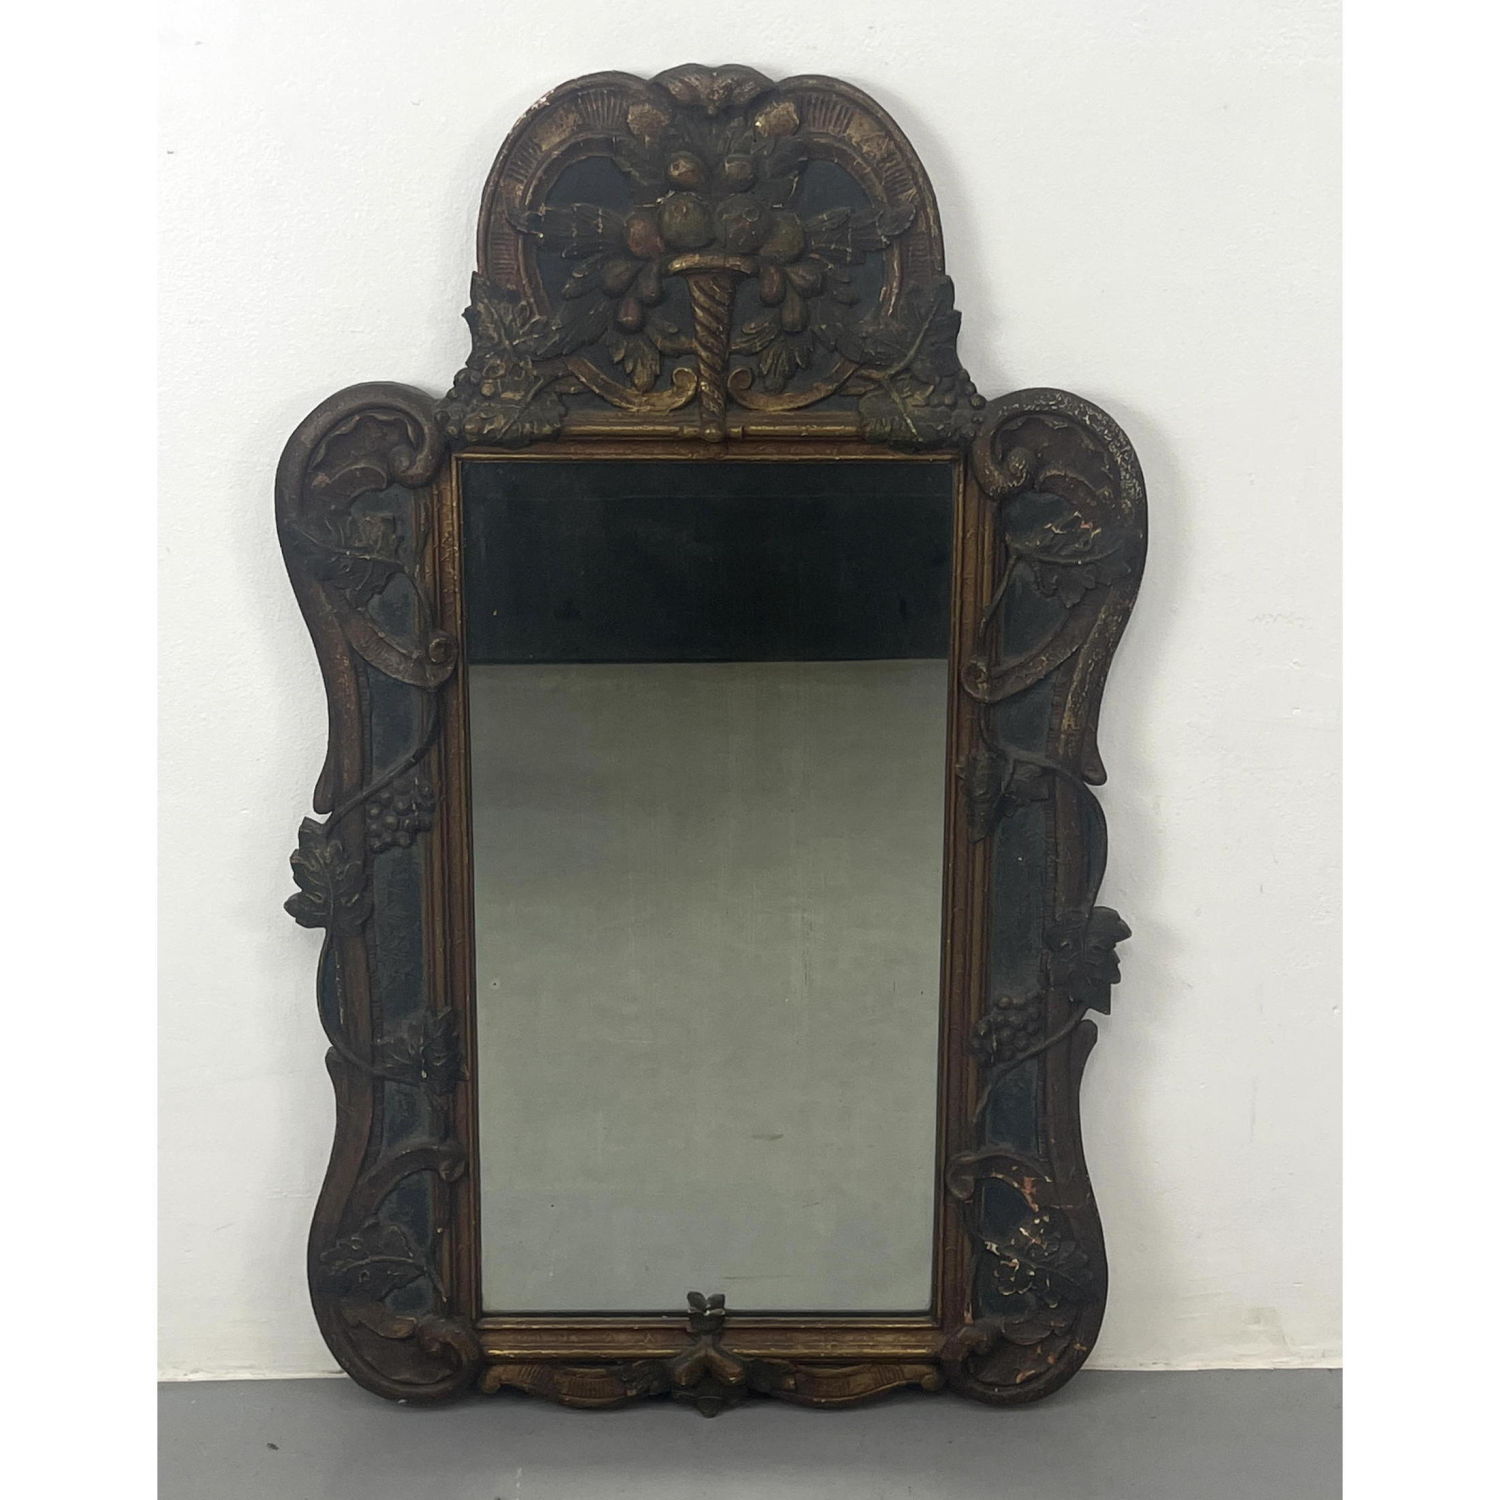 Antique Carved Wood Mirror Frame.